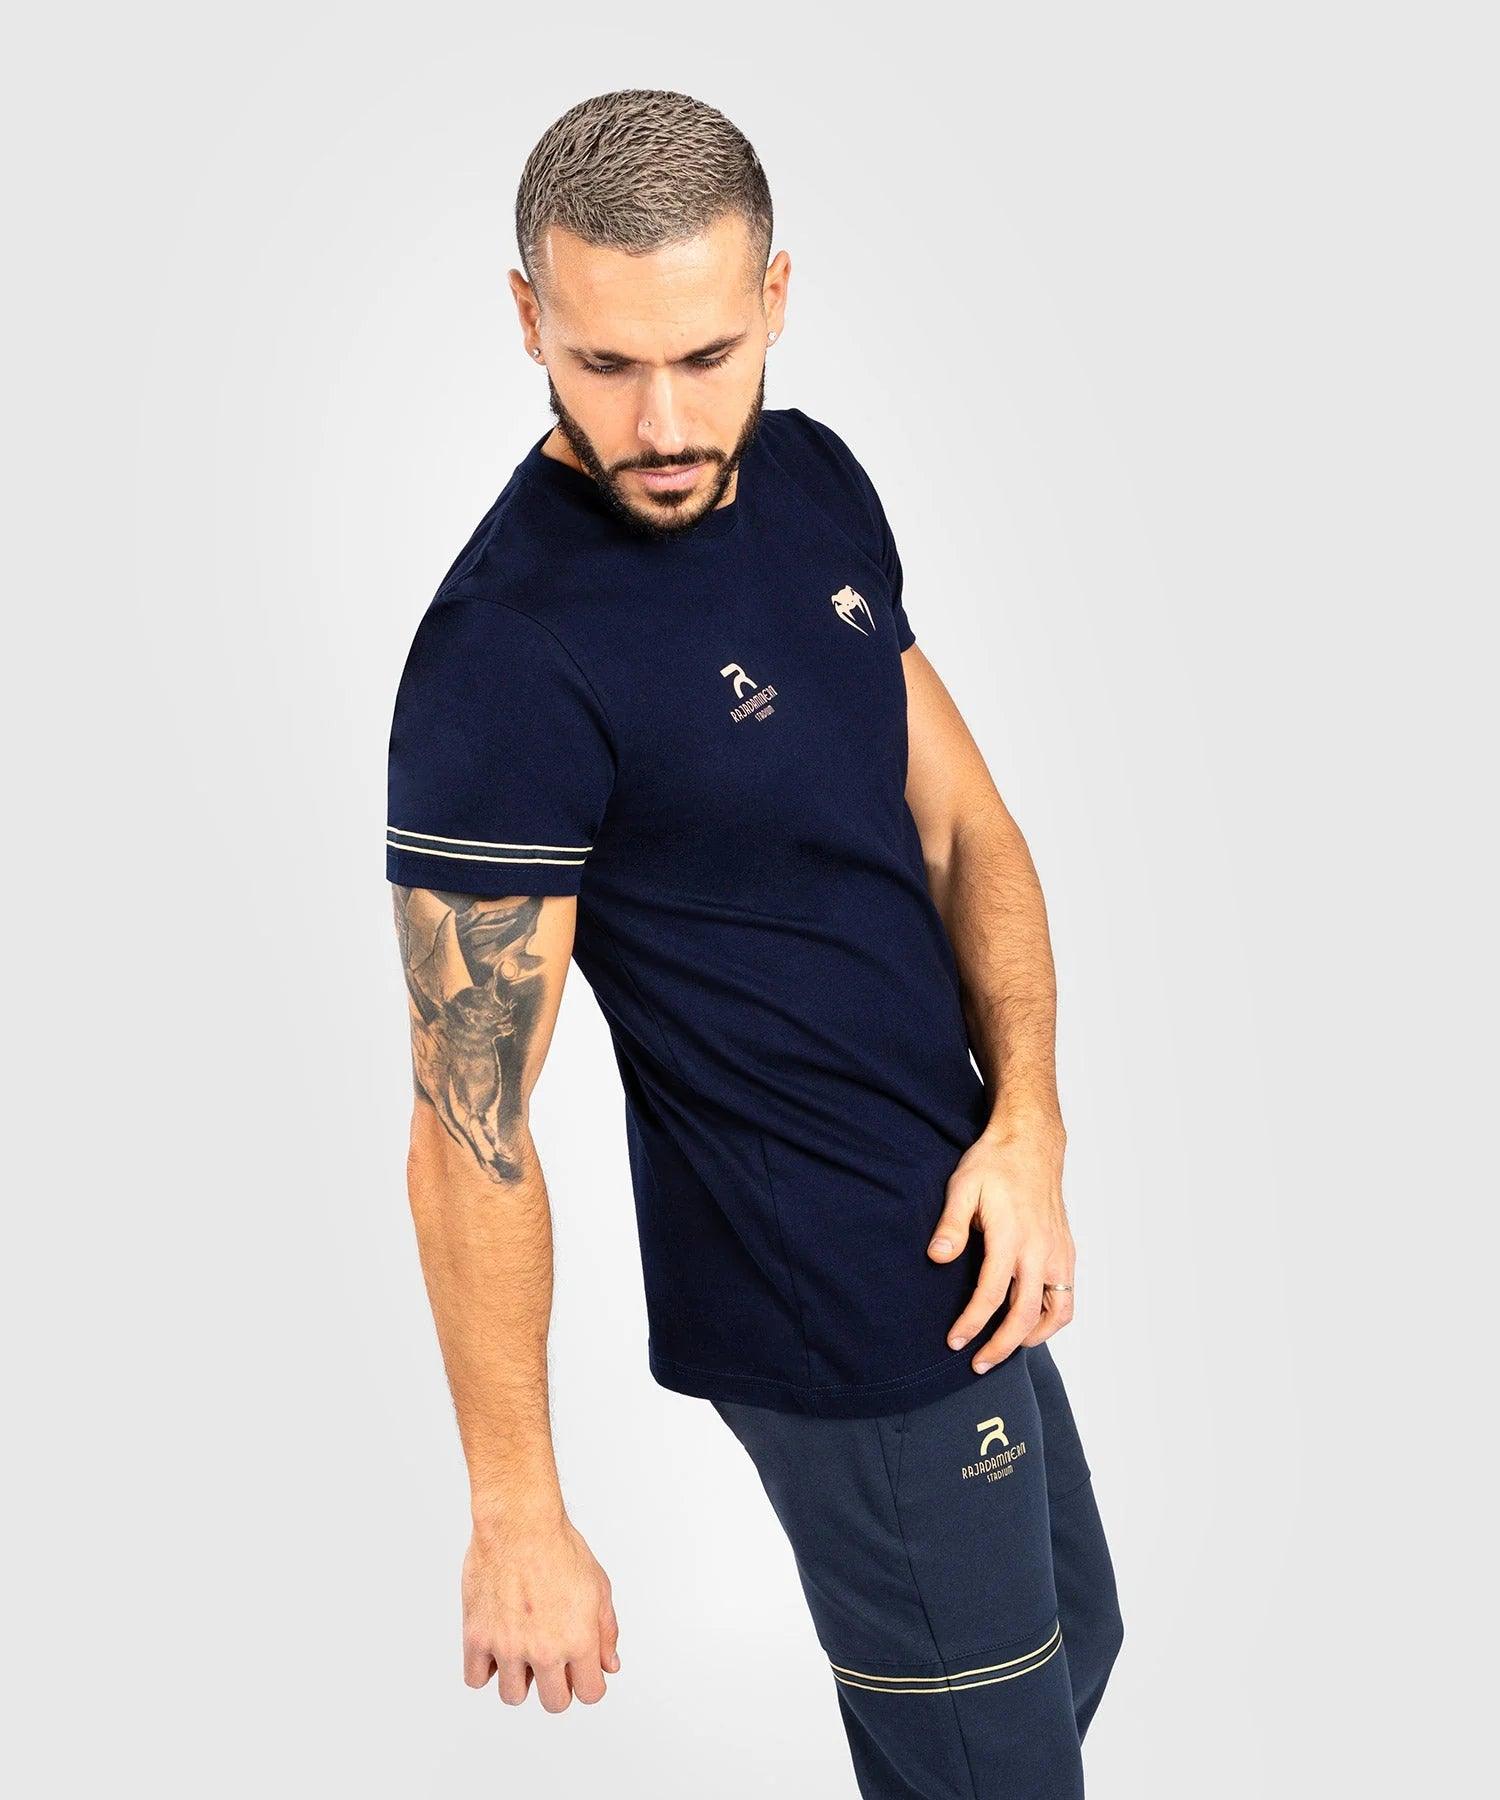 T-Shirt RAJADAMNERN x VENUM - Bleu Marine